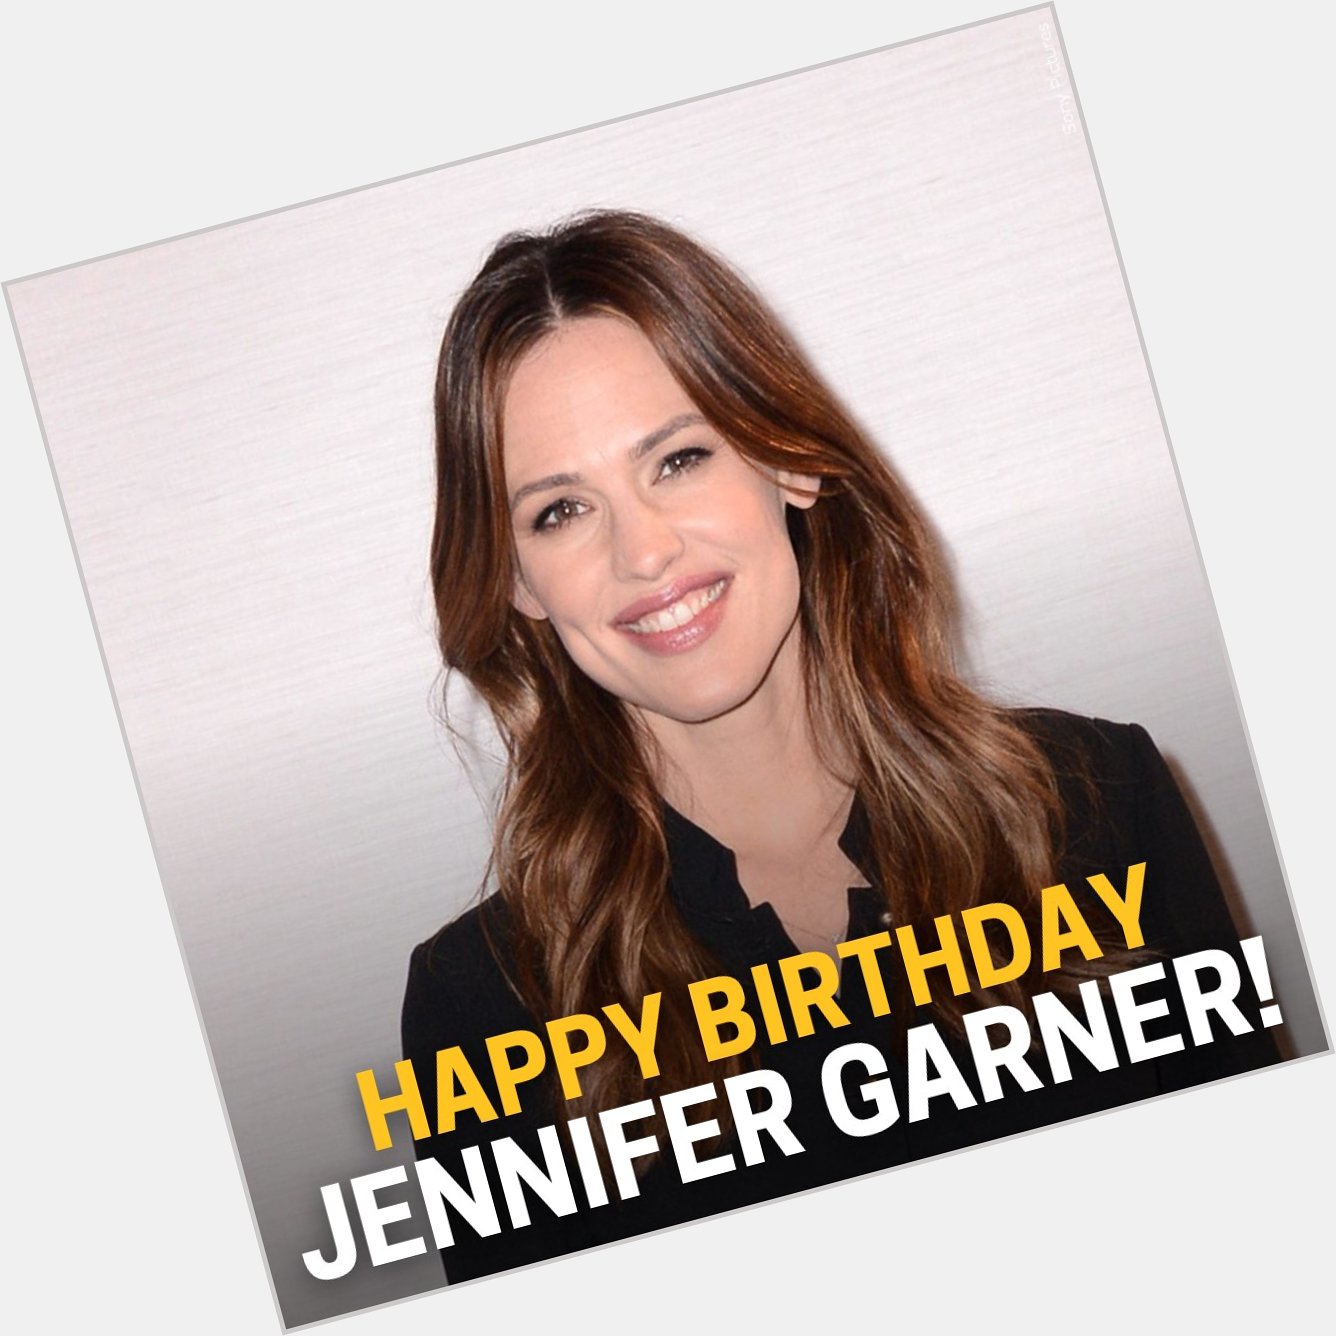 We all loved Jenna & Matty just as much as we love Jennifer Garner. Happy Birthday!!! 